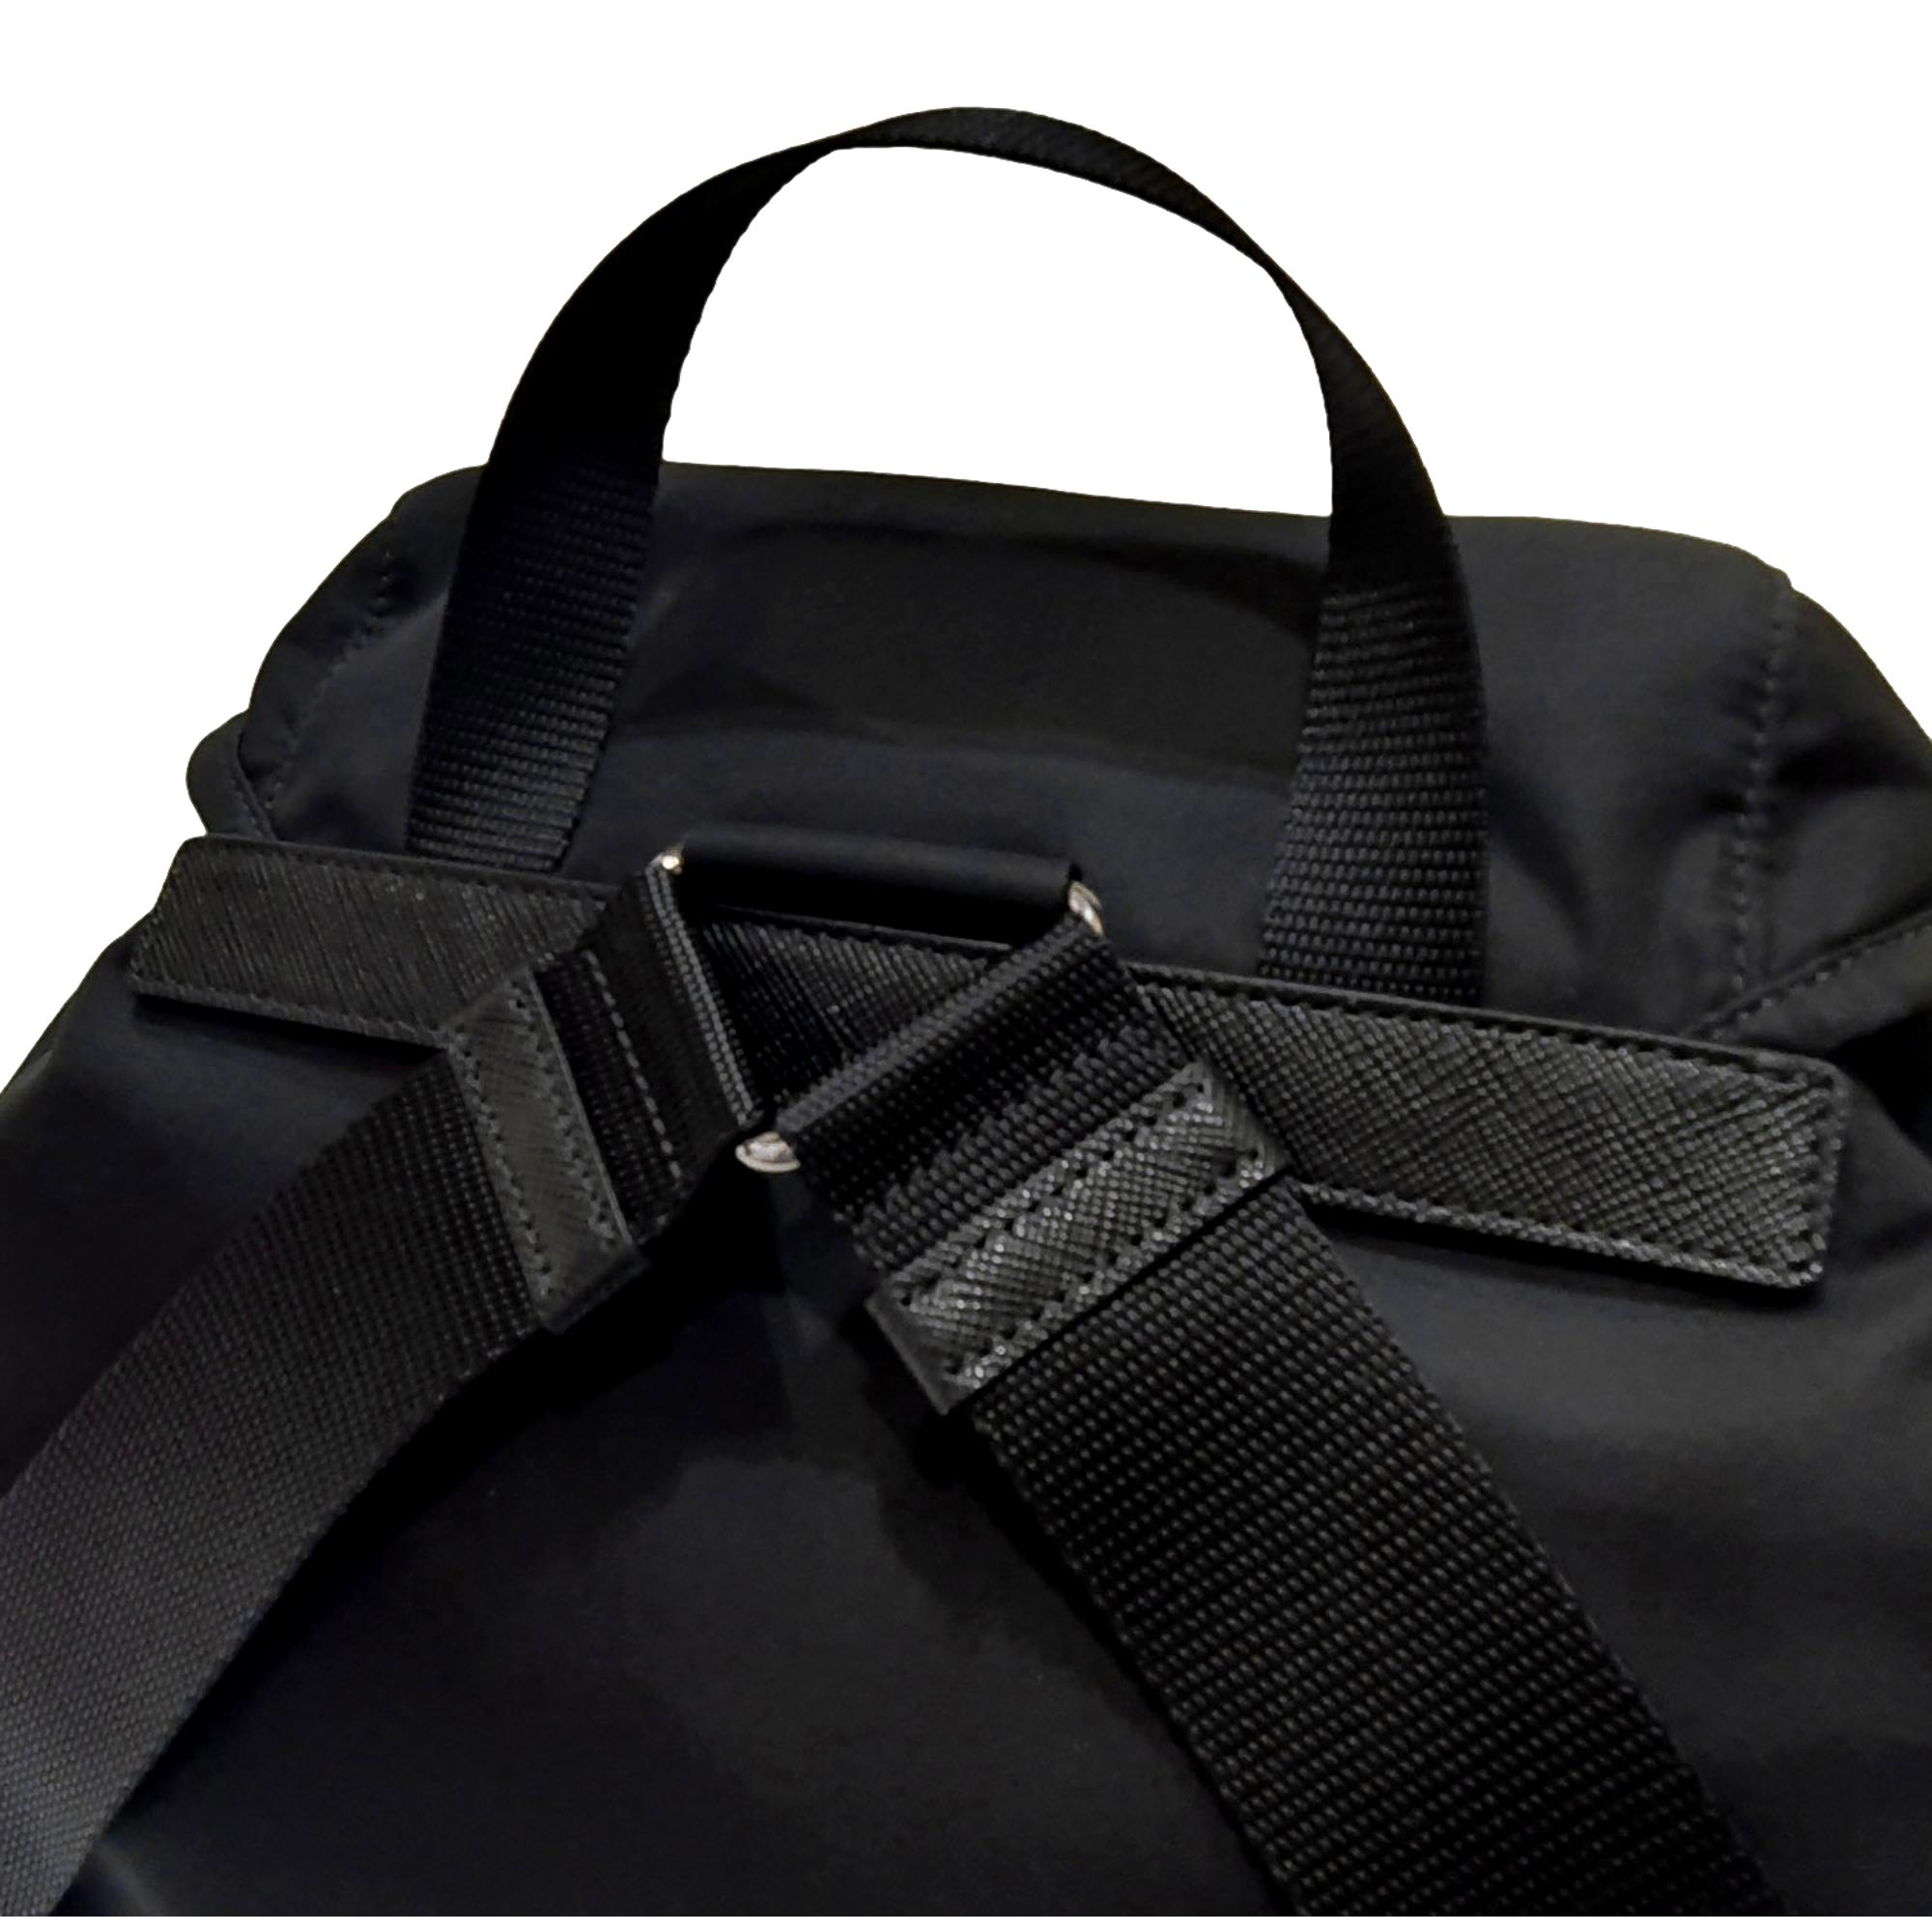 Prada Re-Nylon Black Drawstring Small Rucksack Backpack